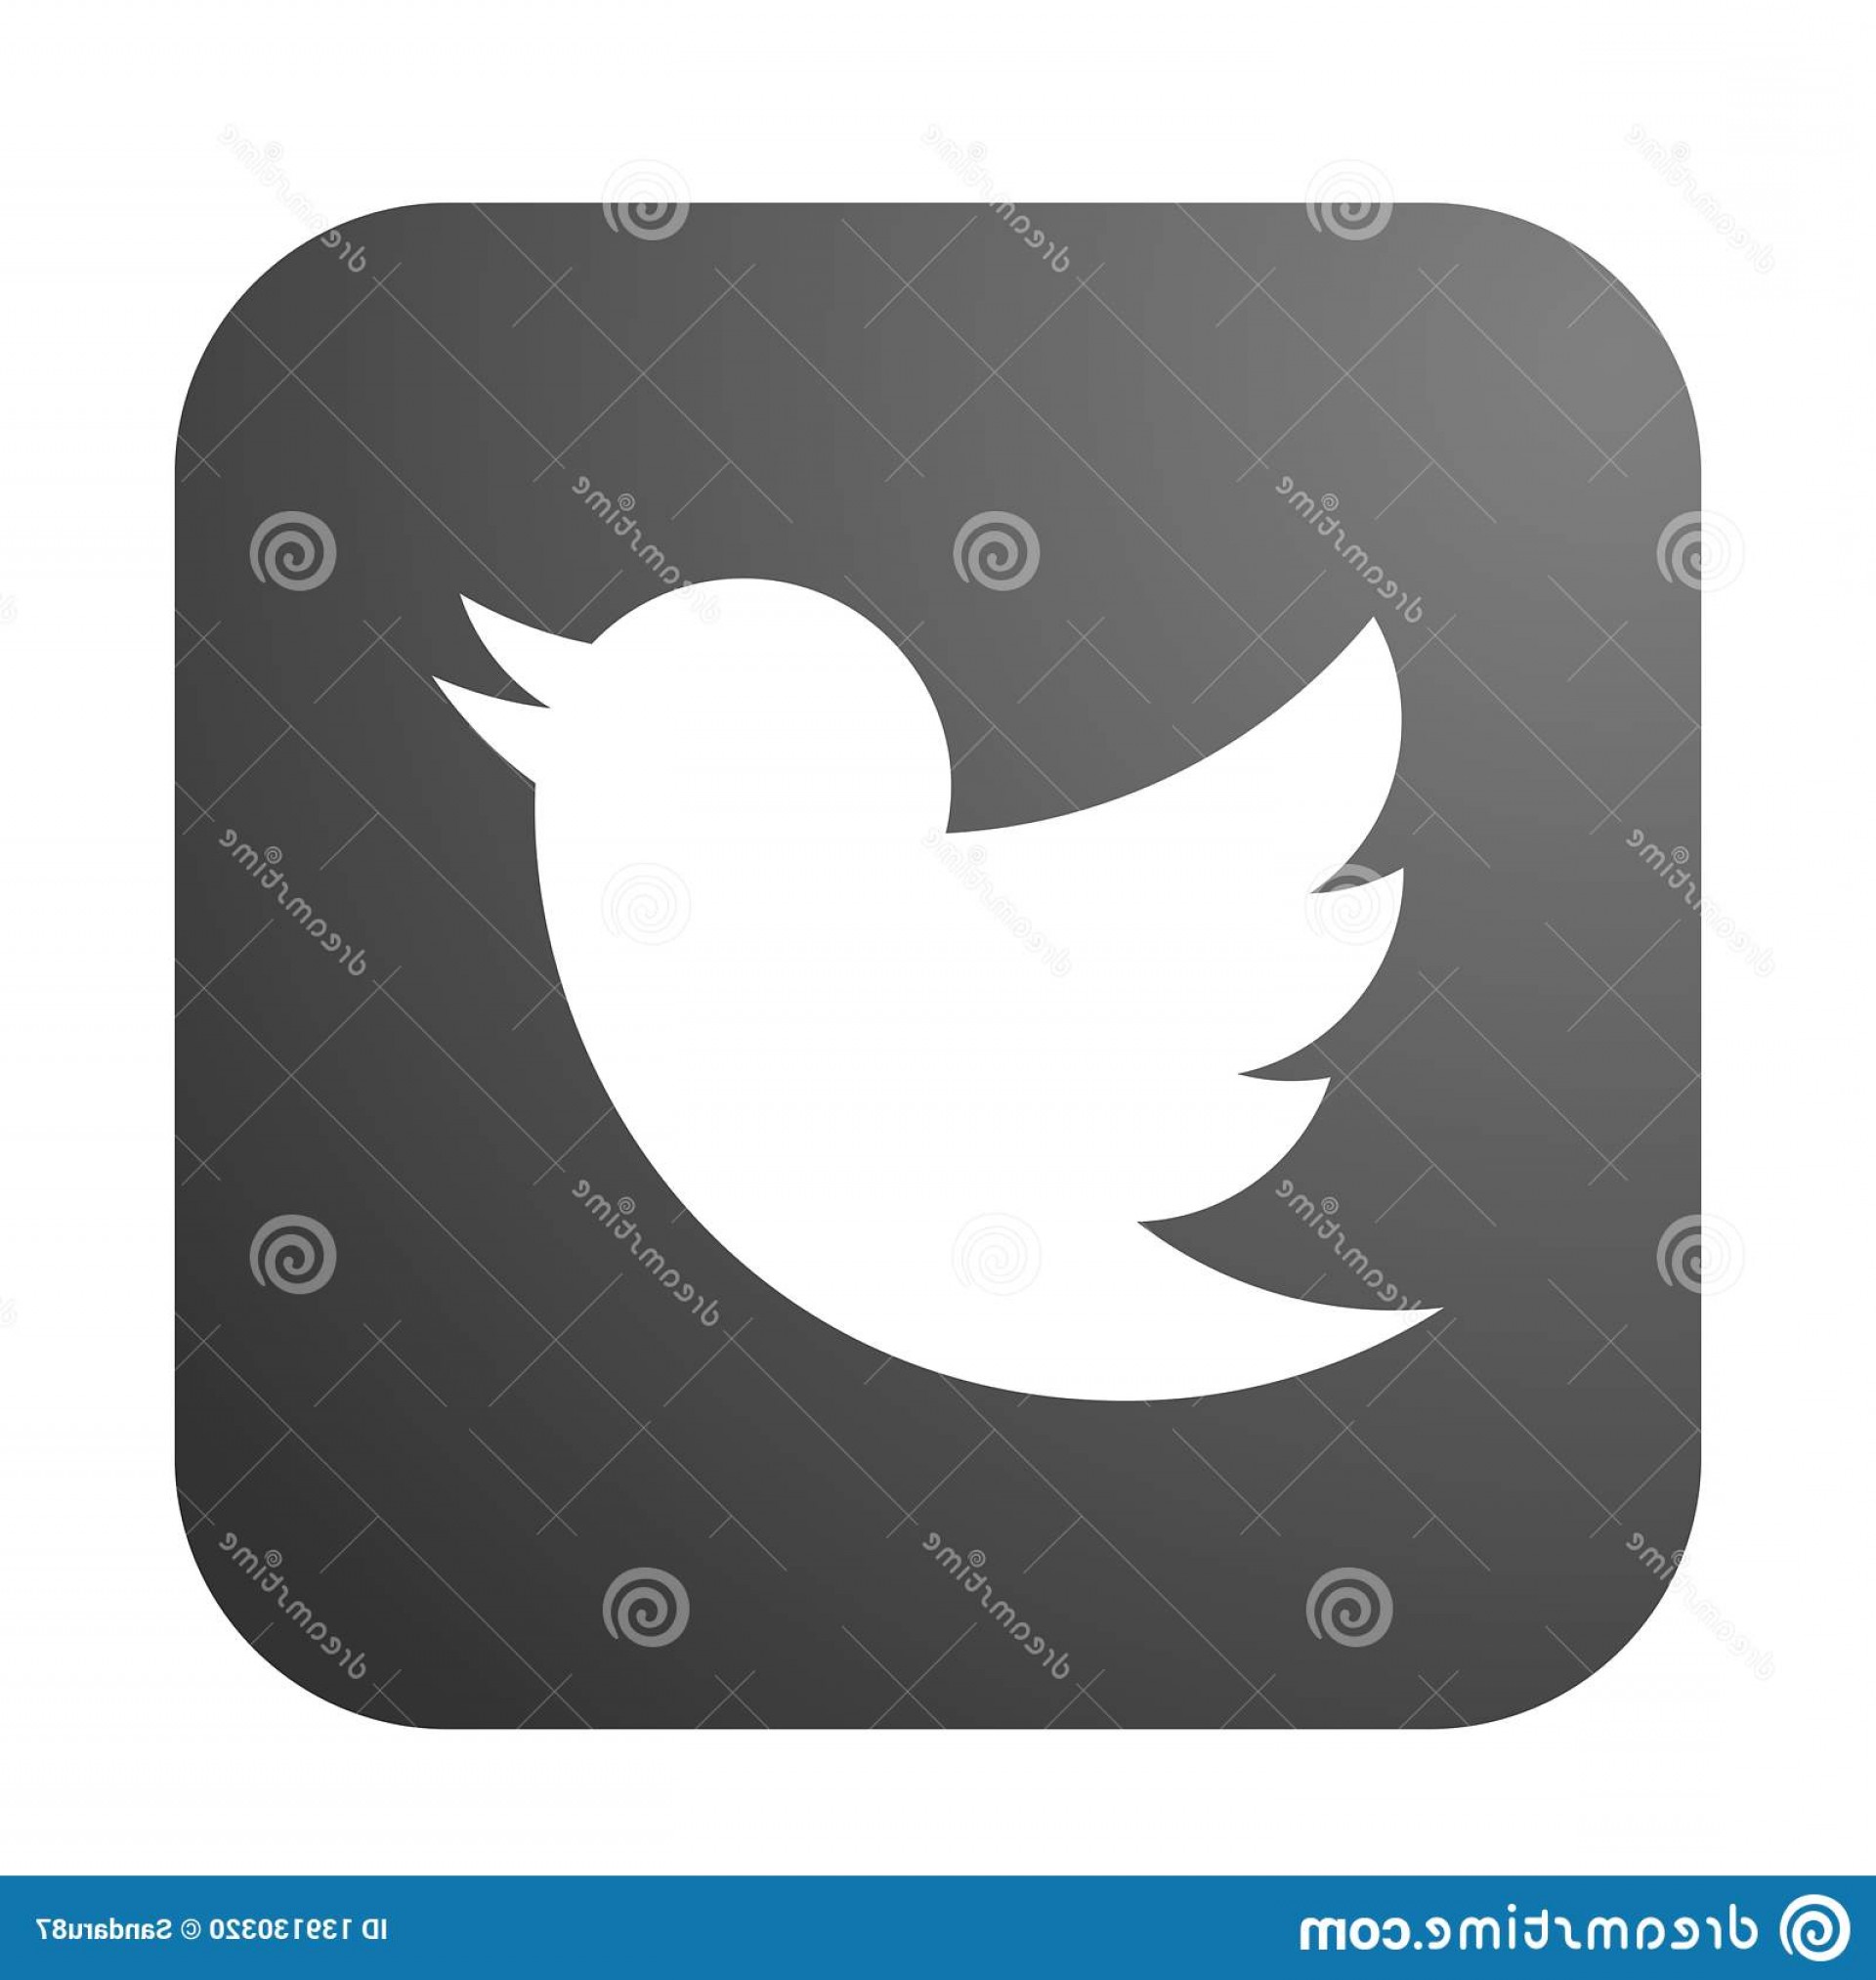 Twitter Bird Logo Vector at Vectorified.com | Collection of Twitter